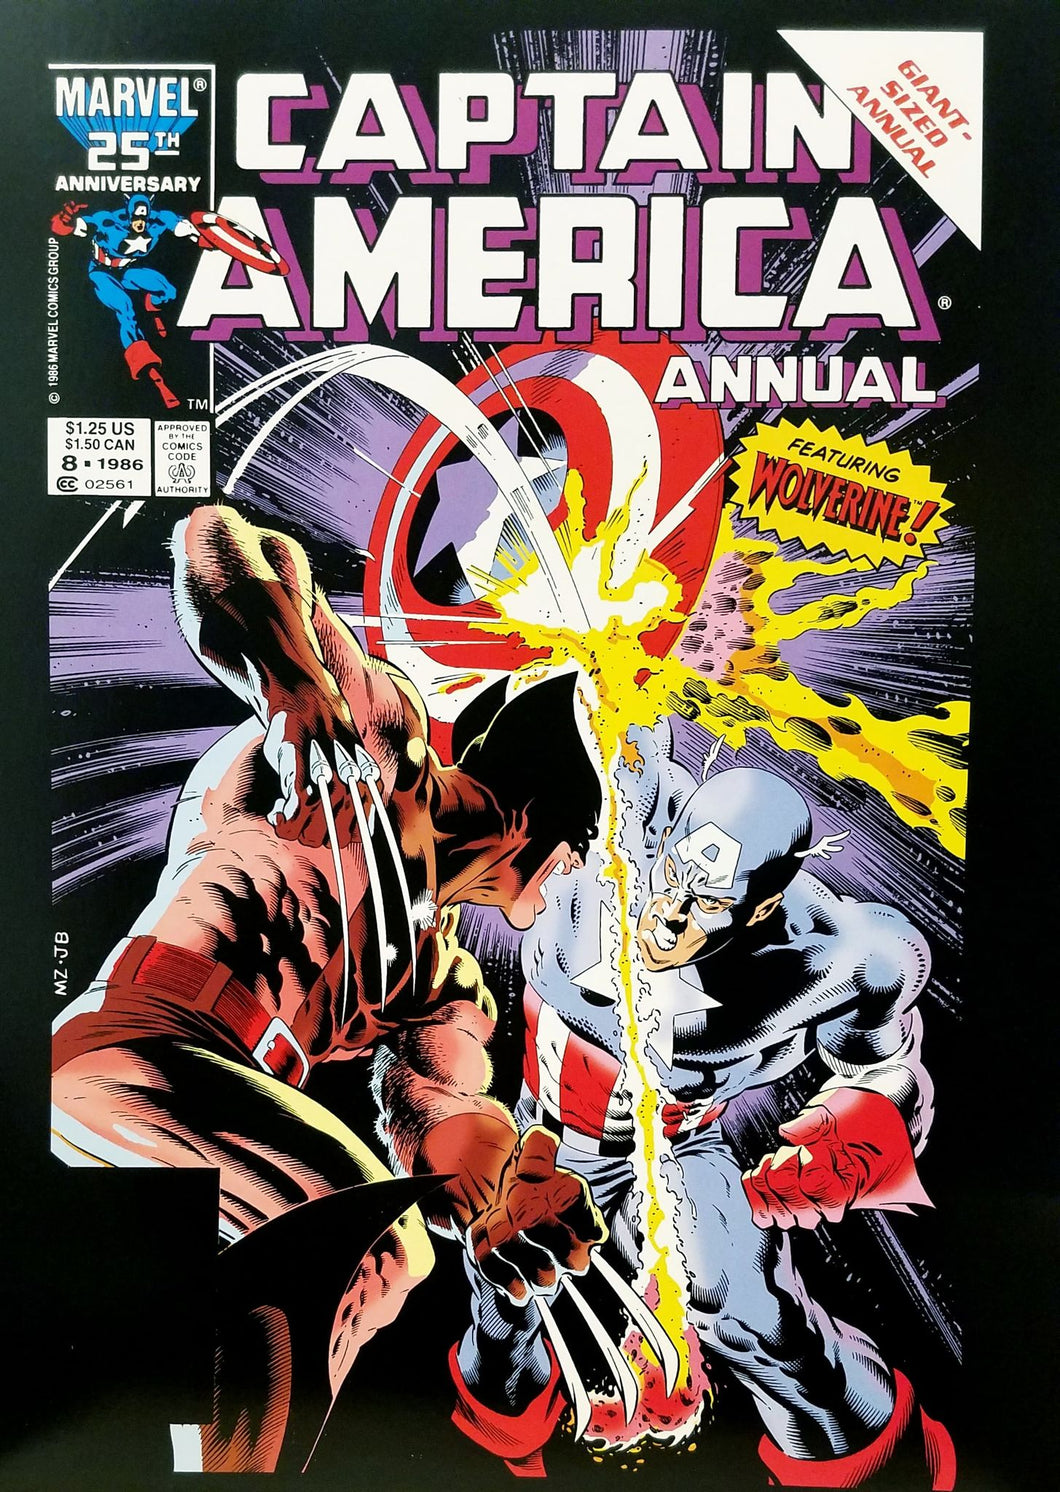 Captain America Annual #8 12x16 FRAMED Art Poster Print by Mike Zeck, Marvel Comics